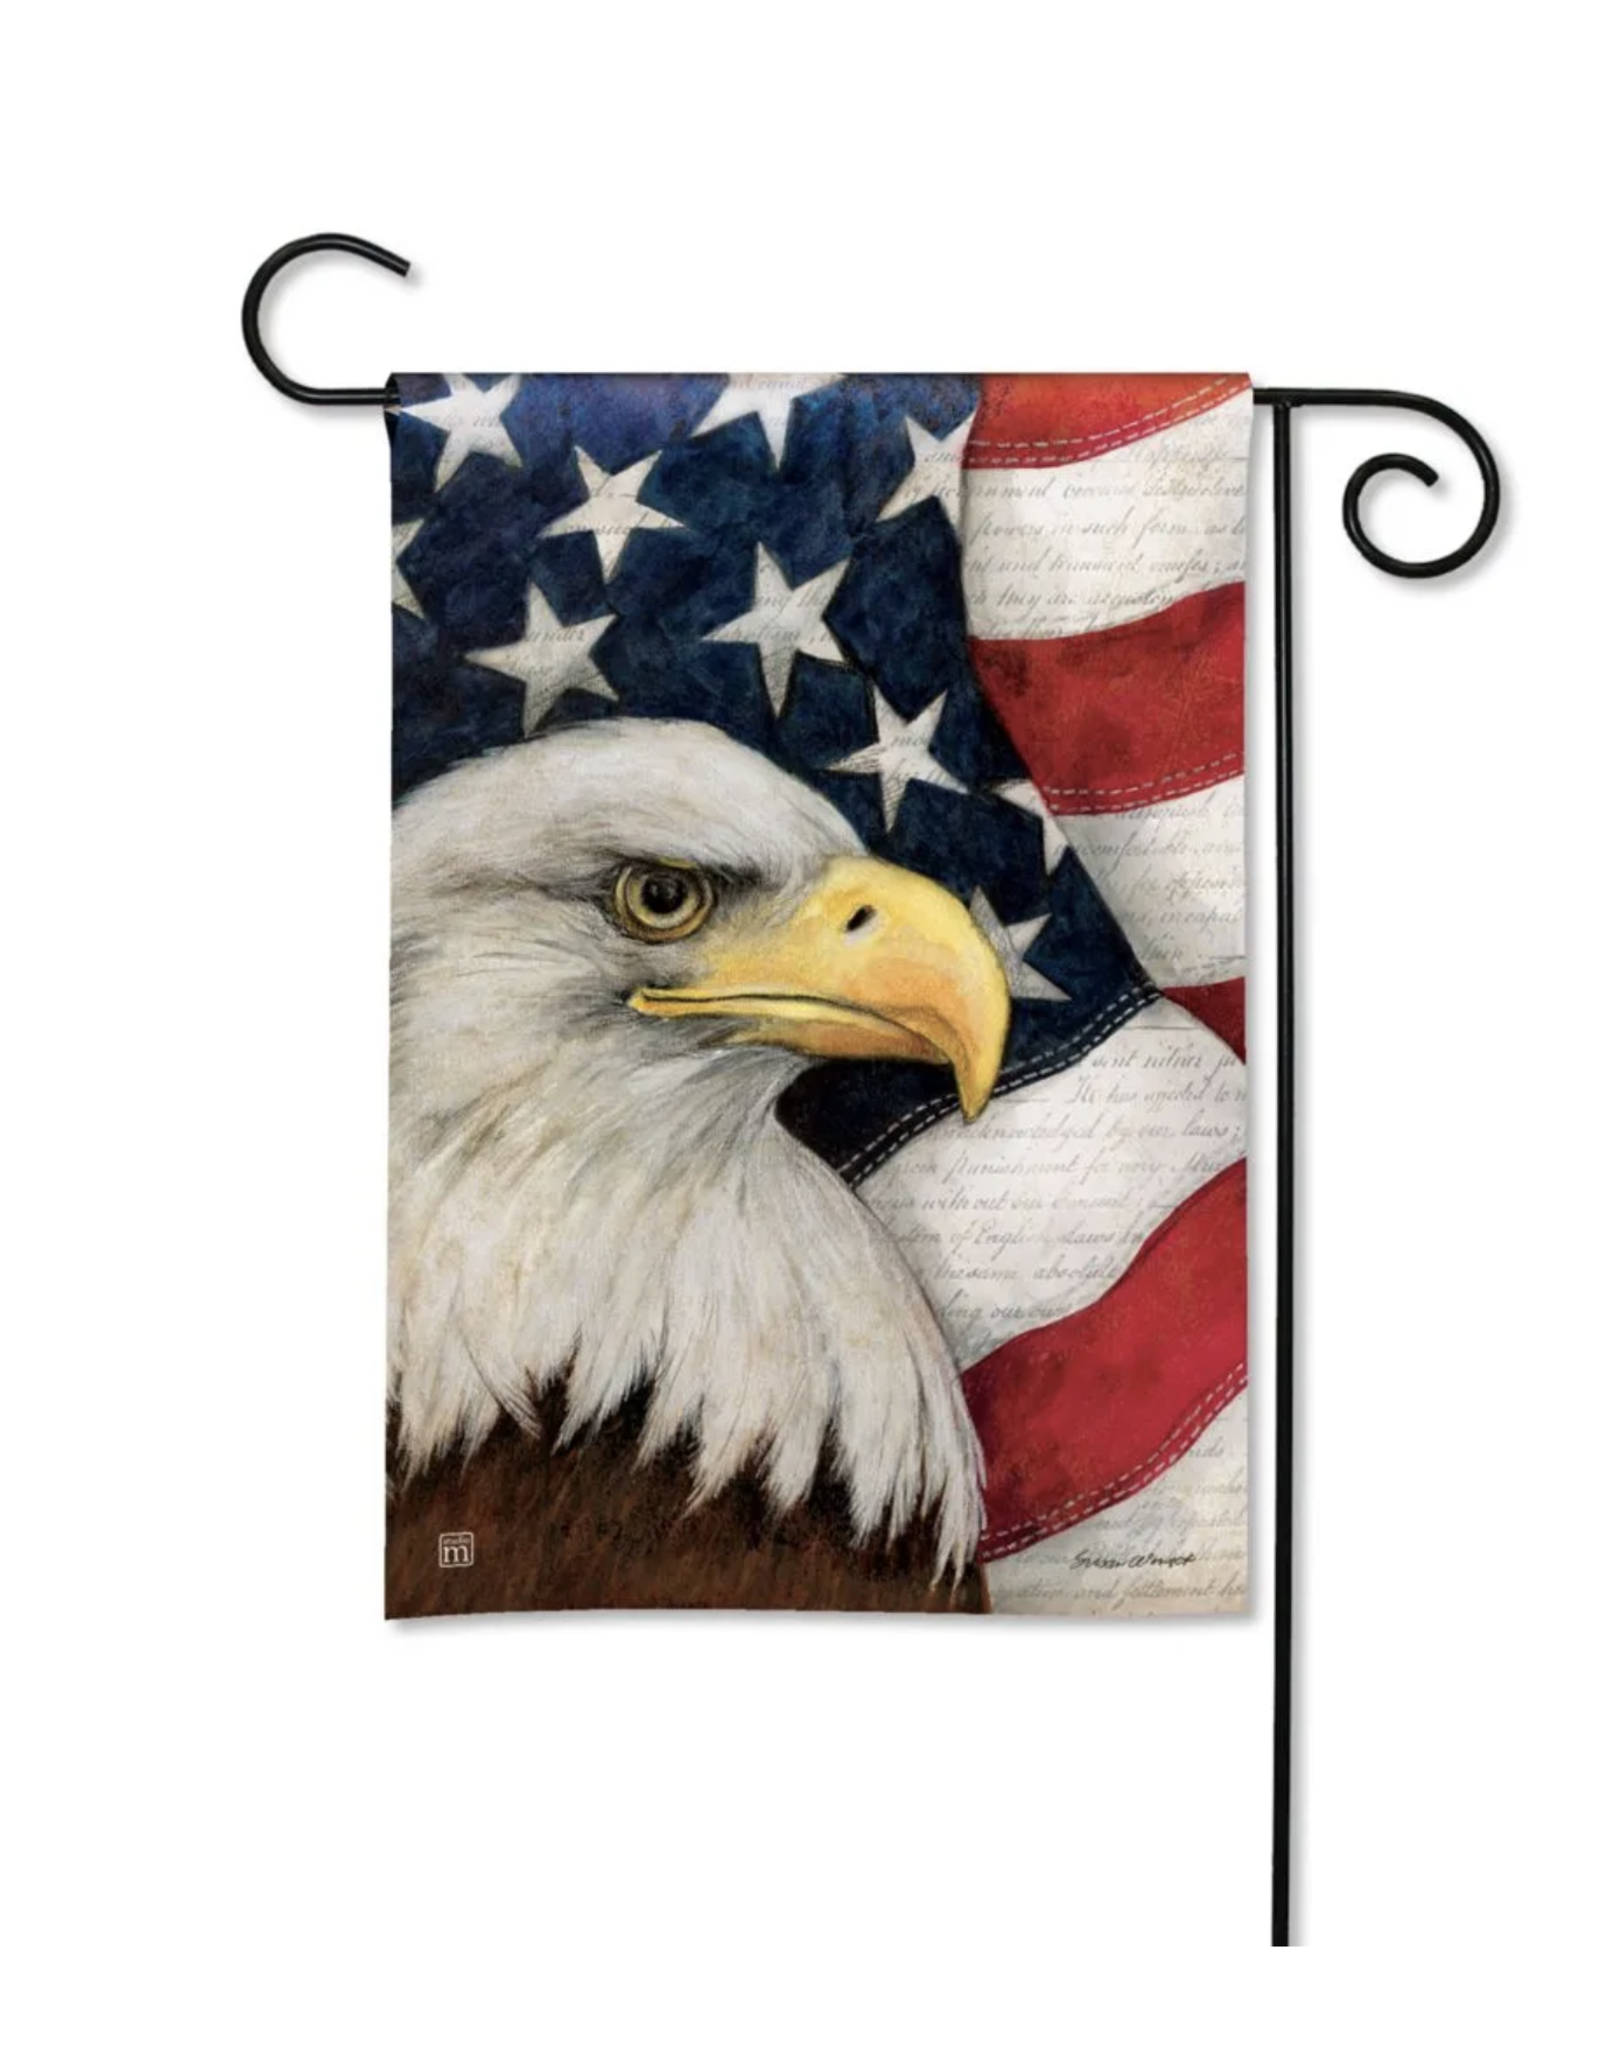 Studio M American Eagle Garden Flag